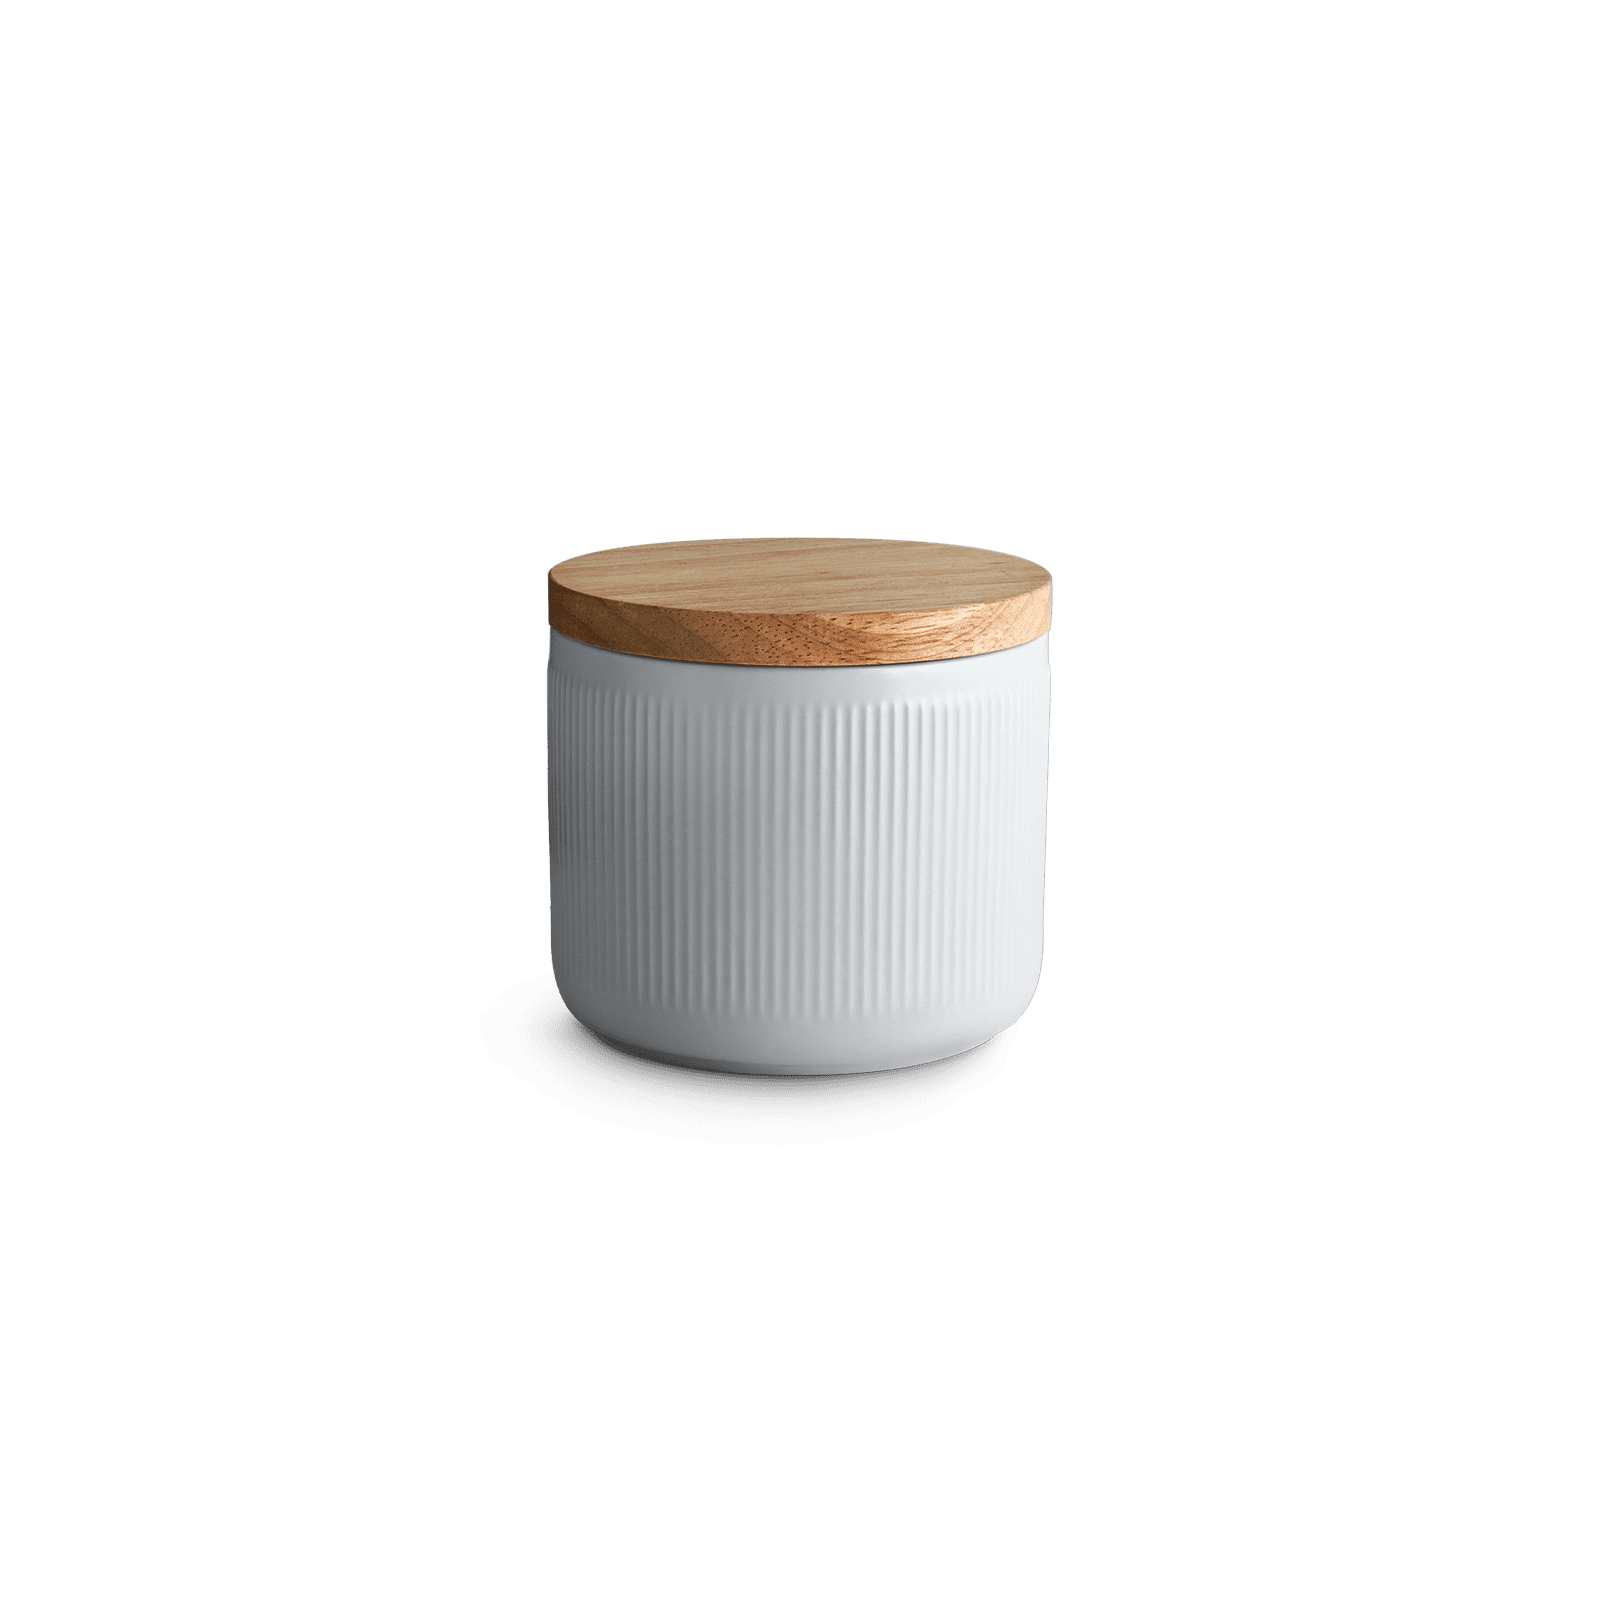 Keramik Vorratsdosen Stripes mit Holzdeckel - 10,1 x 9,3 cm - Hellgrau